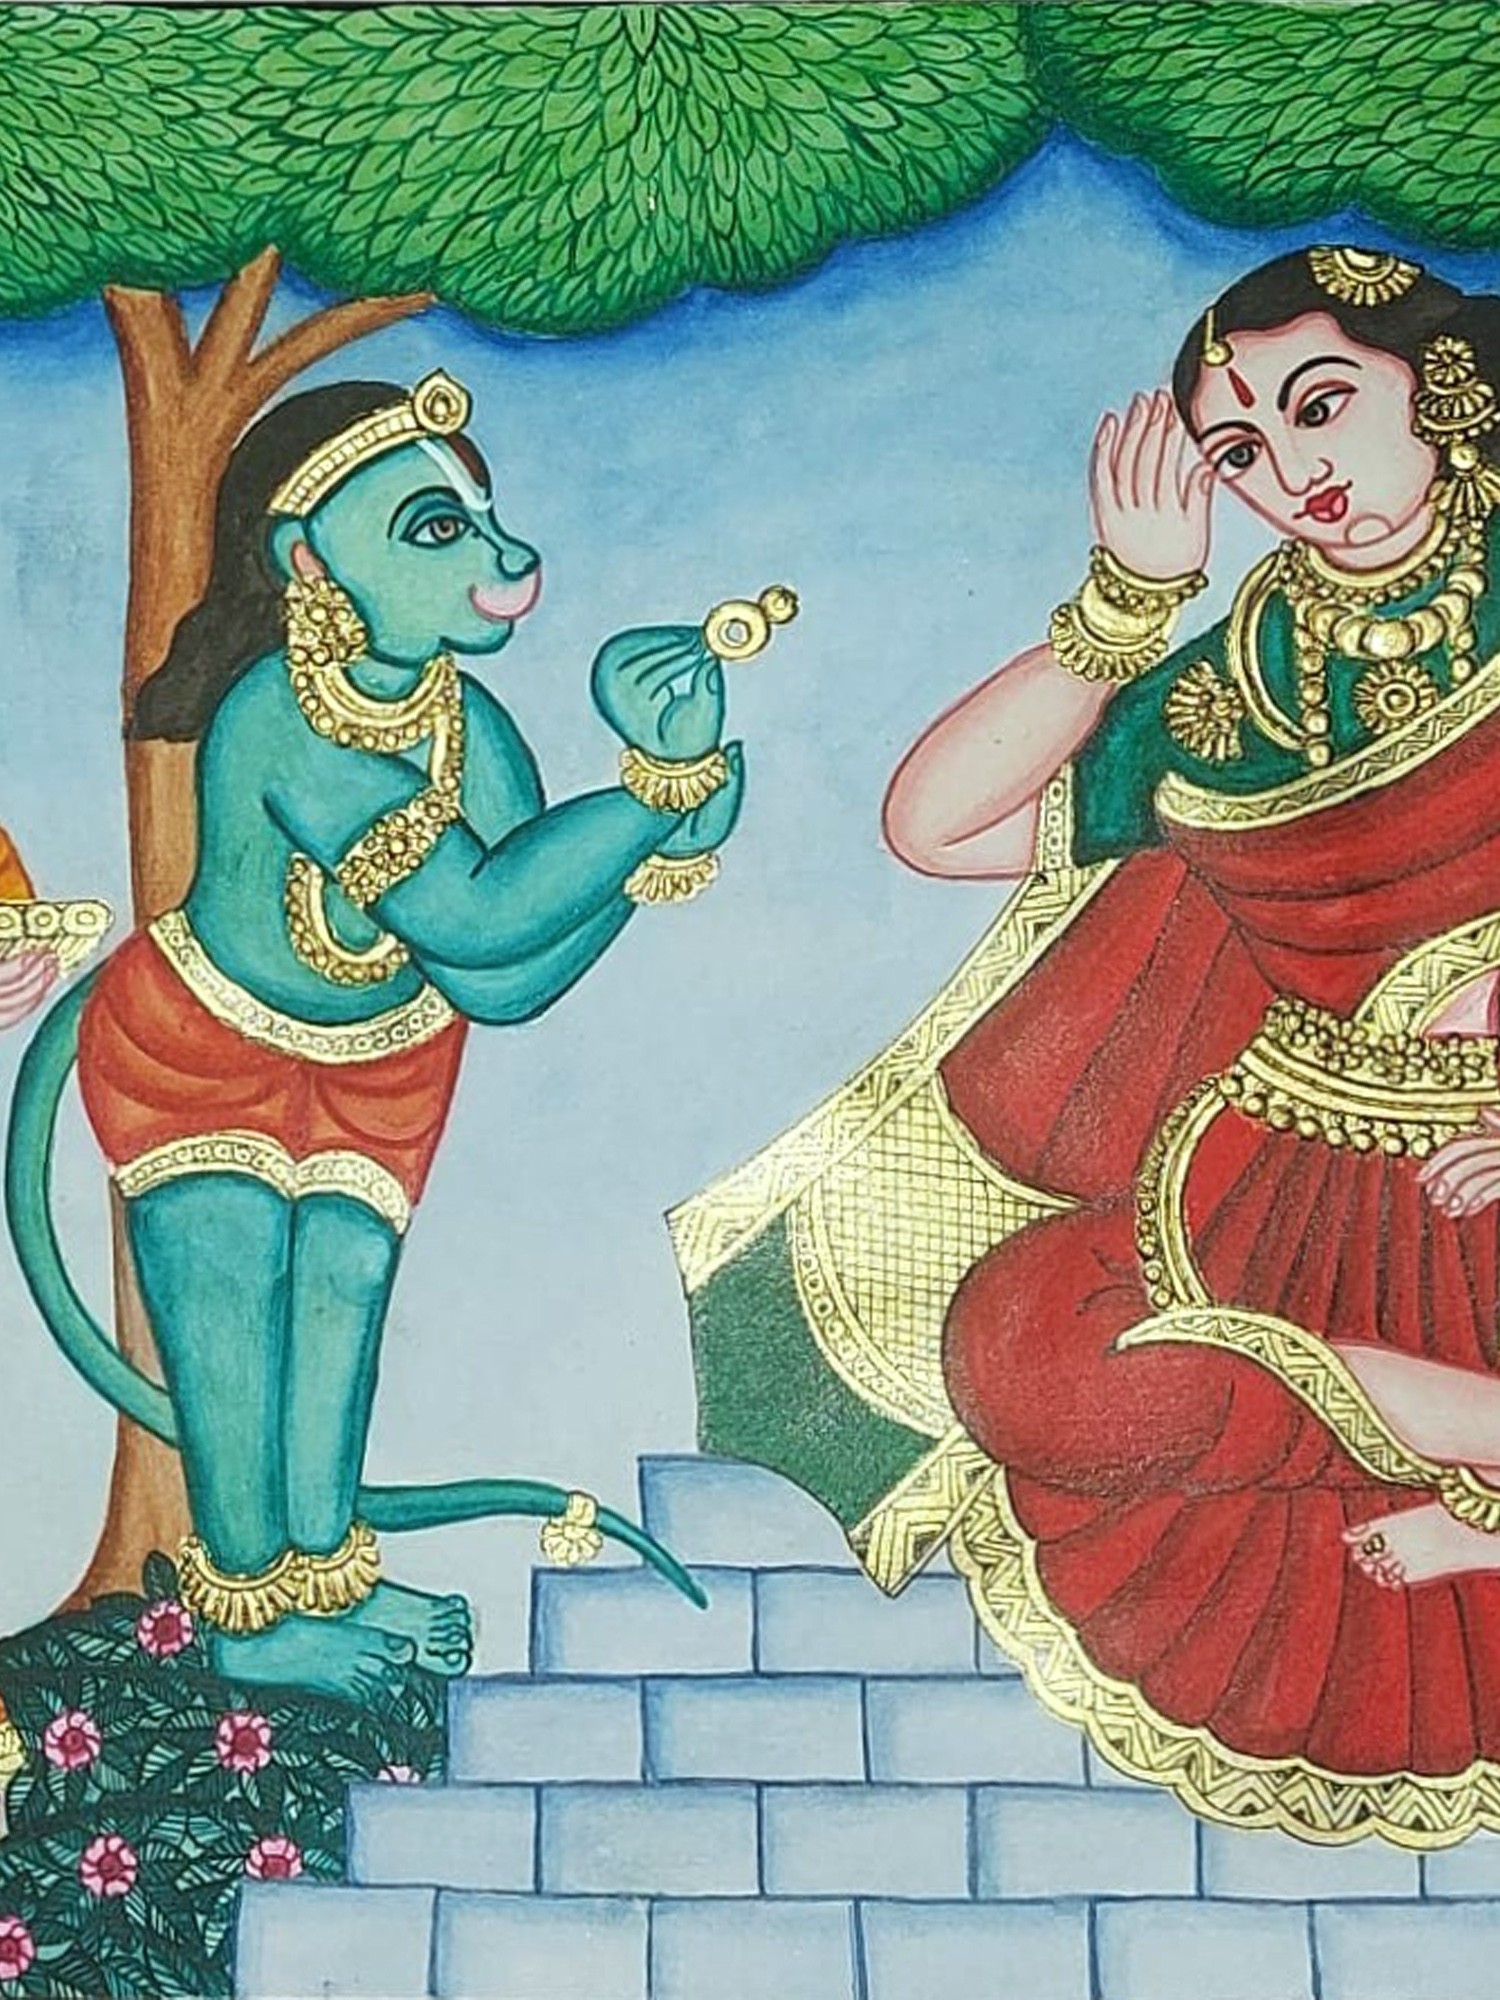 Ramayana in Lanka: The place where Hanuman met Sita – Call of the Vedas